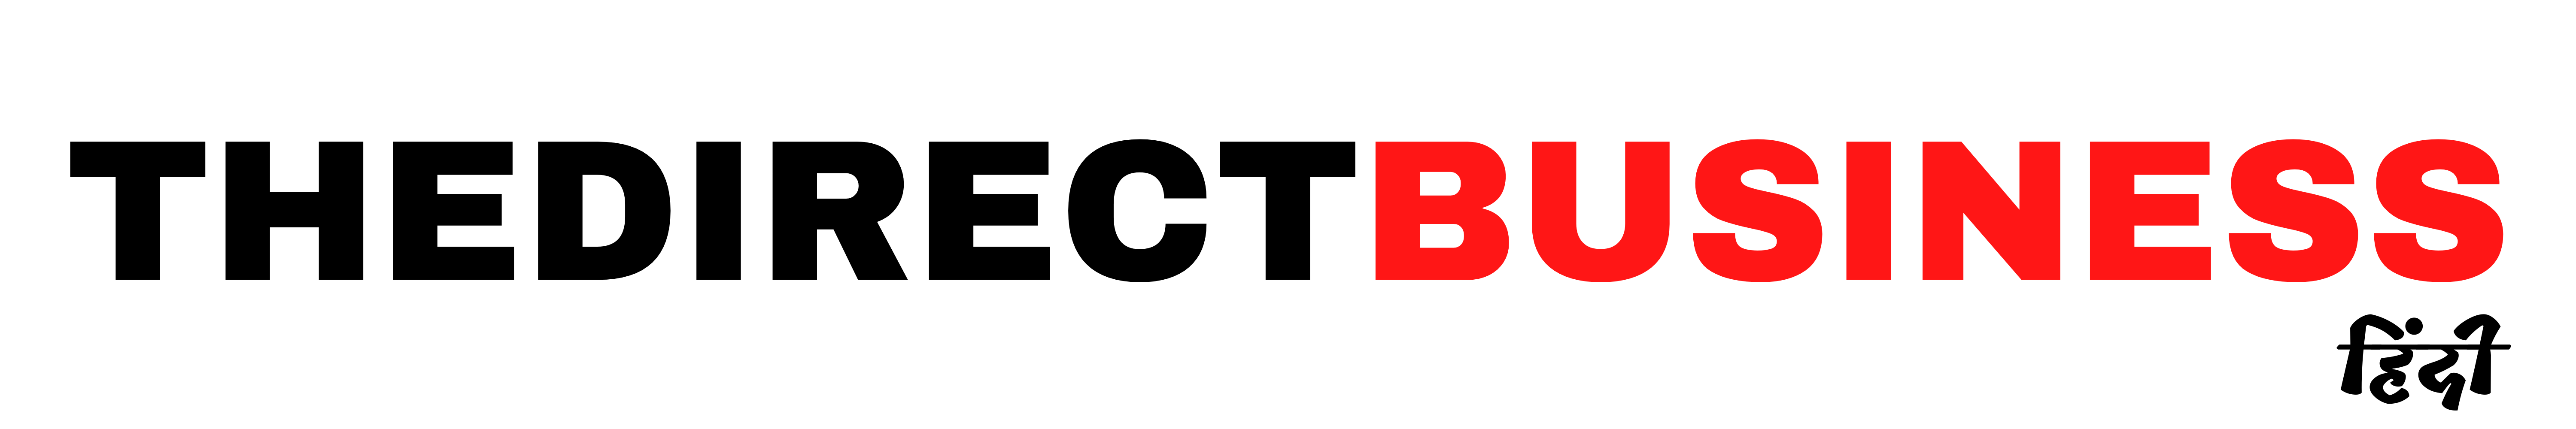 the direct business hindi logo